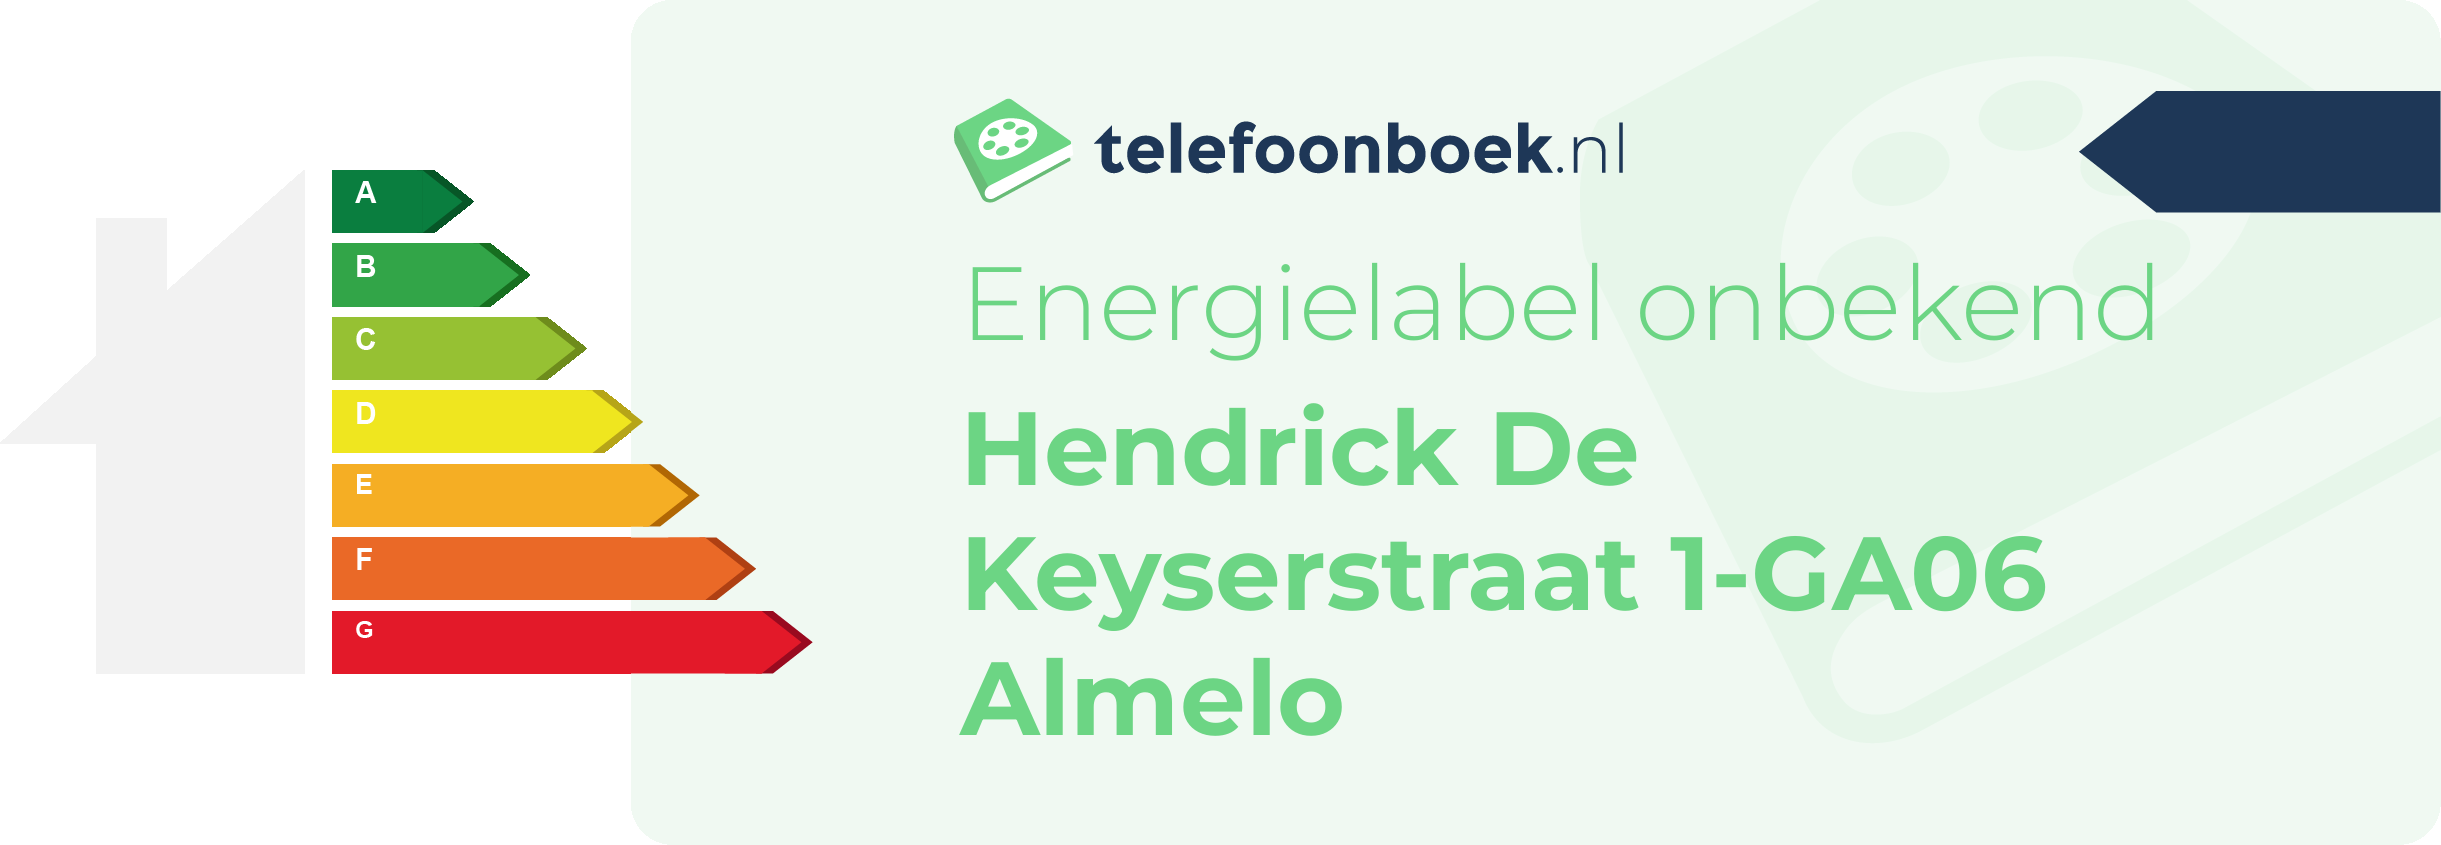 Energielabel Hendrick De Keyserstraat 1-GA06 Almelo